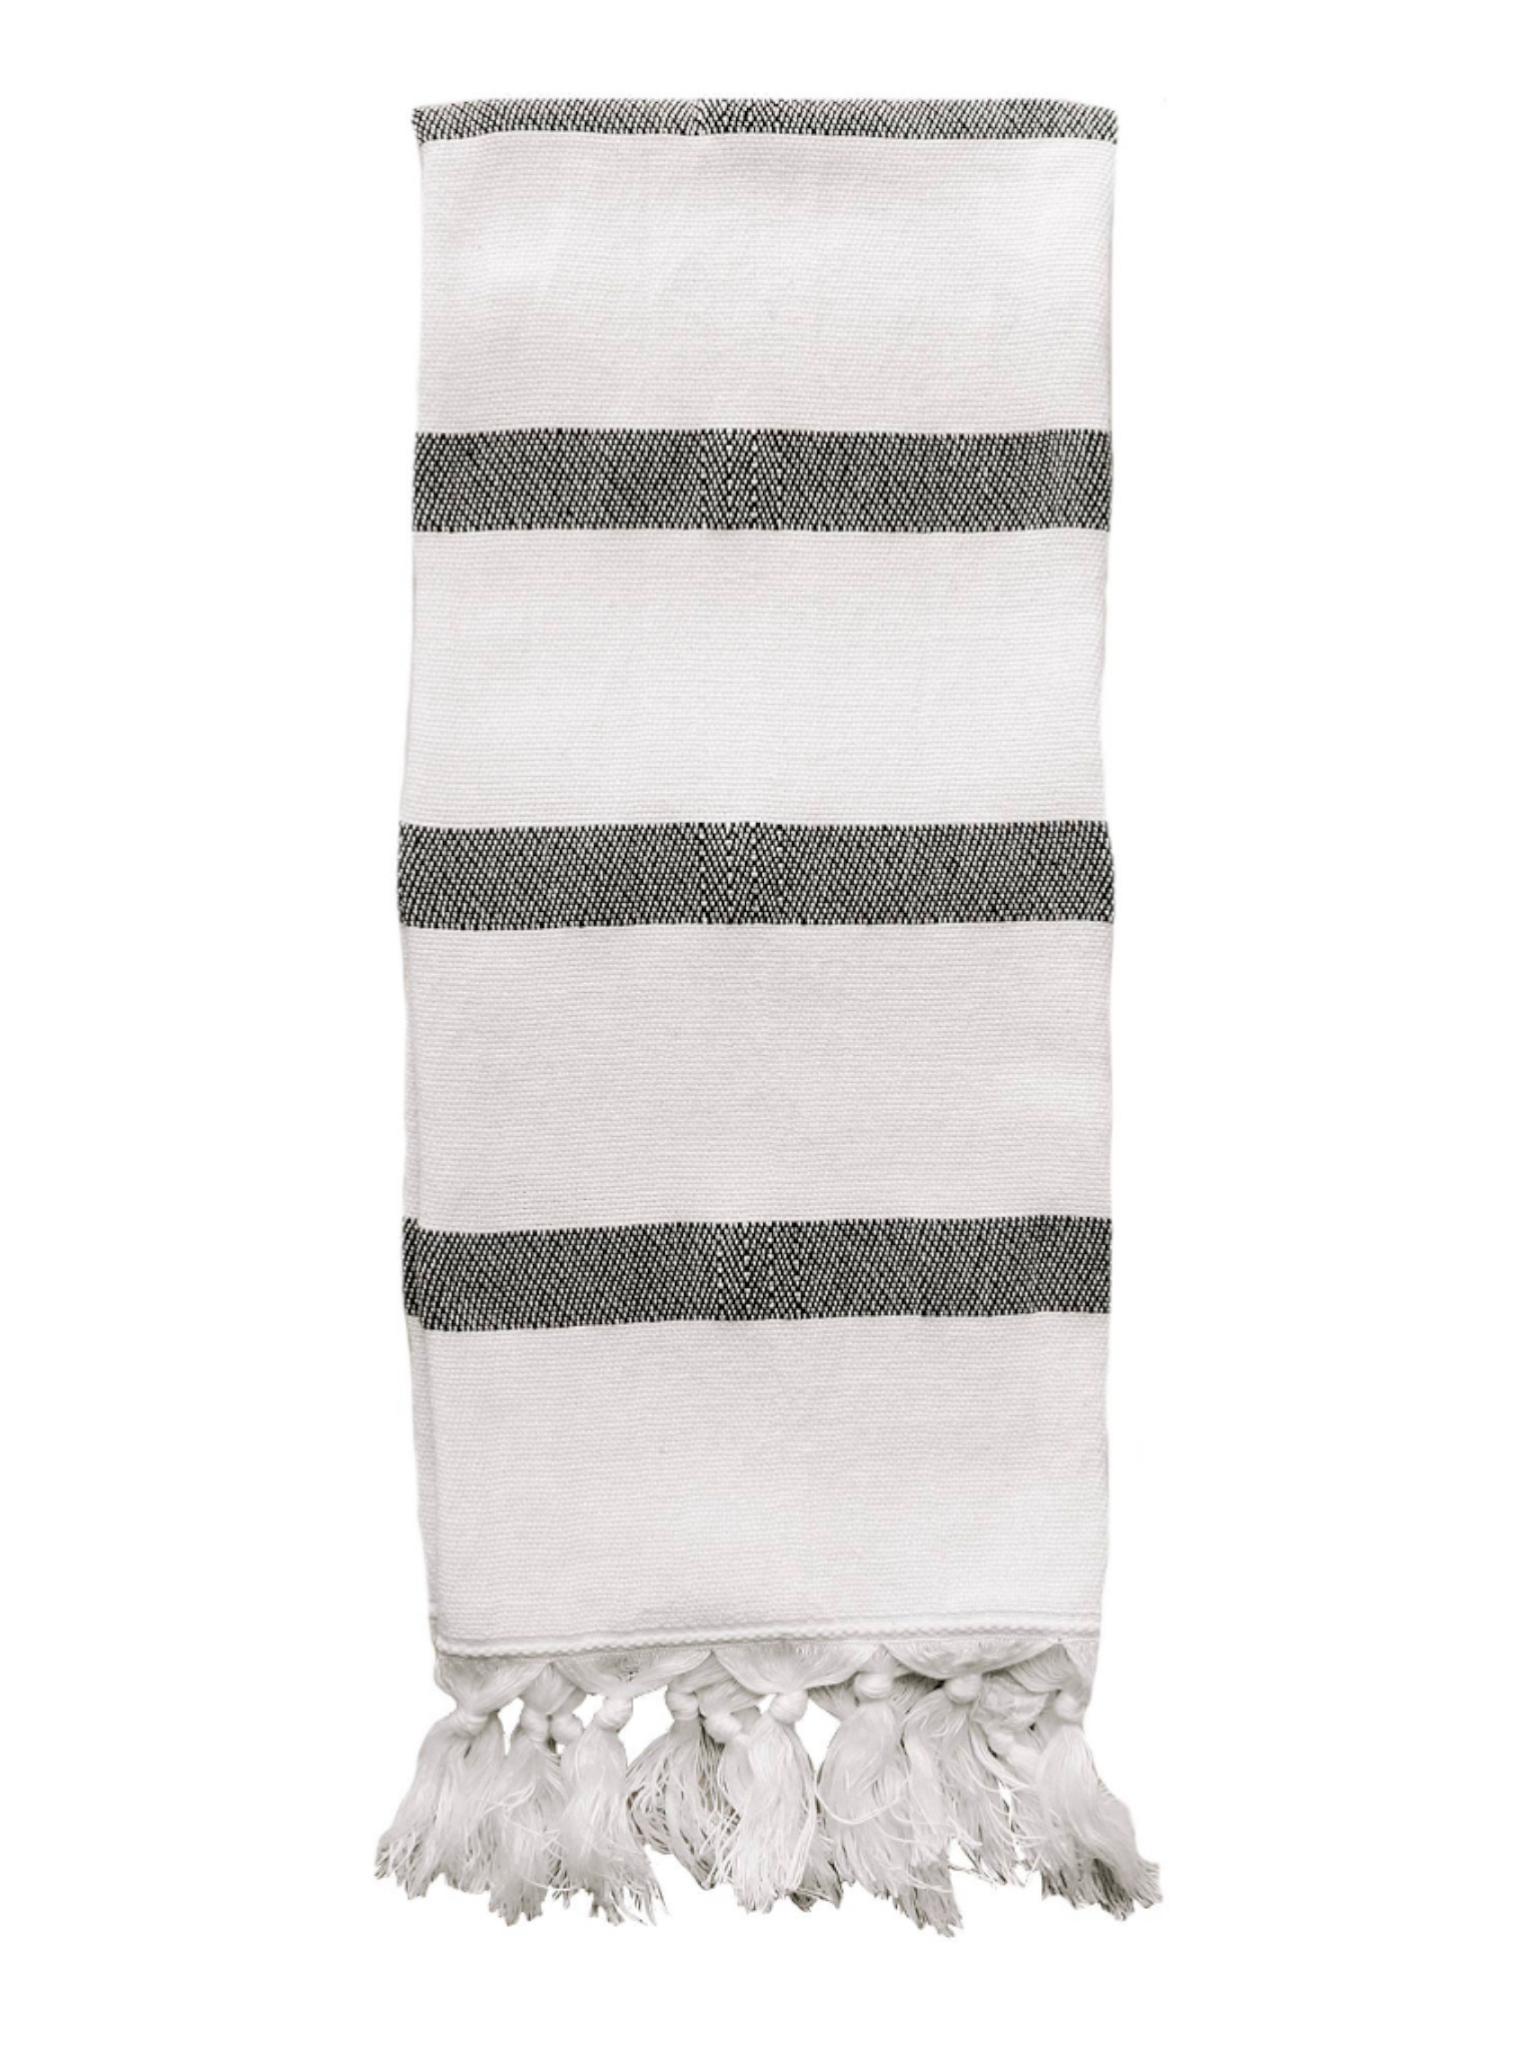 Turkish Hand Towel - Single Stripe